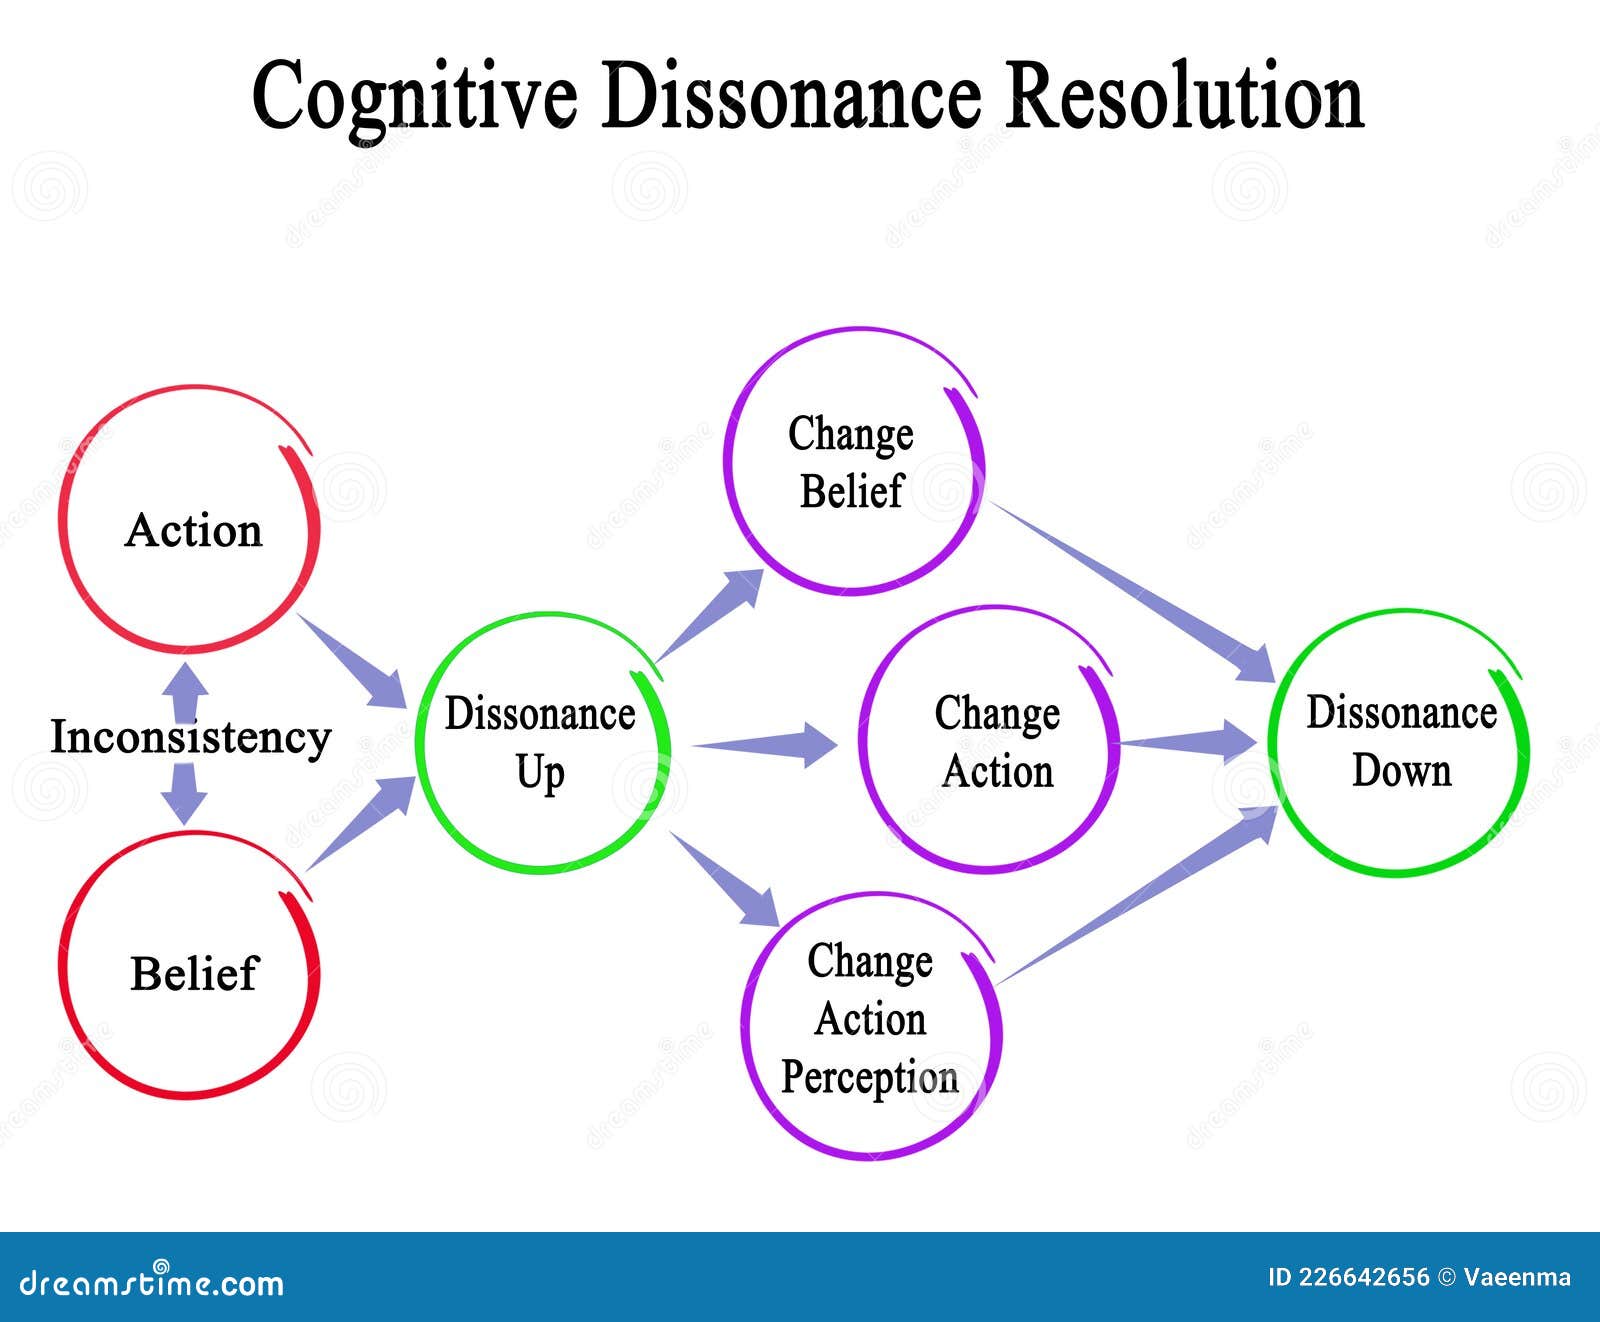 resolution of cognitive dissonance